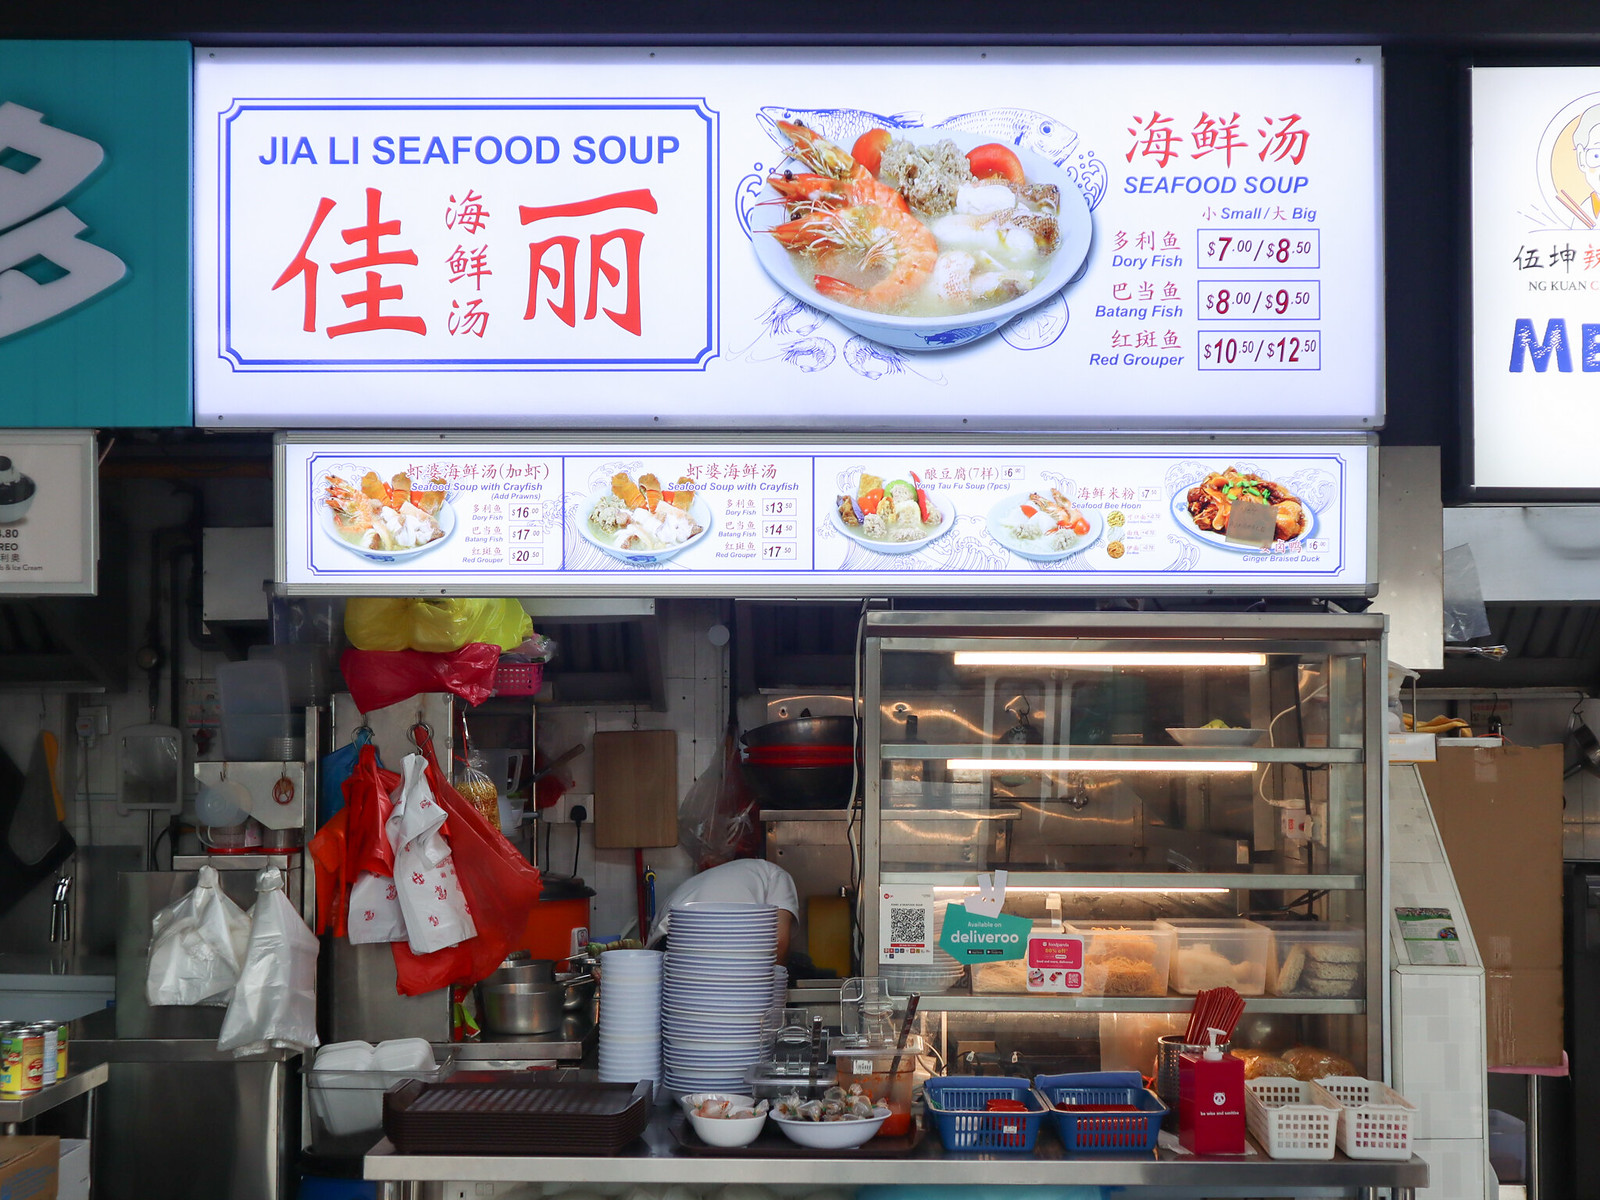 Jia Li Seafood Soup - storefront landscape